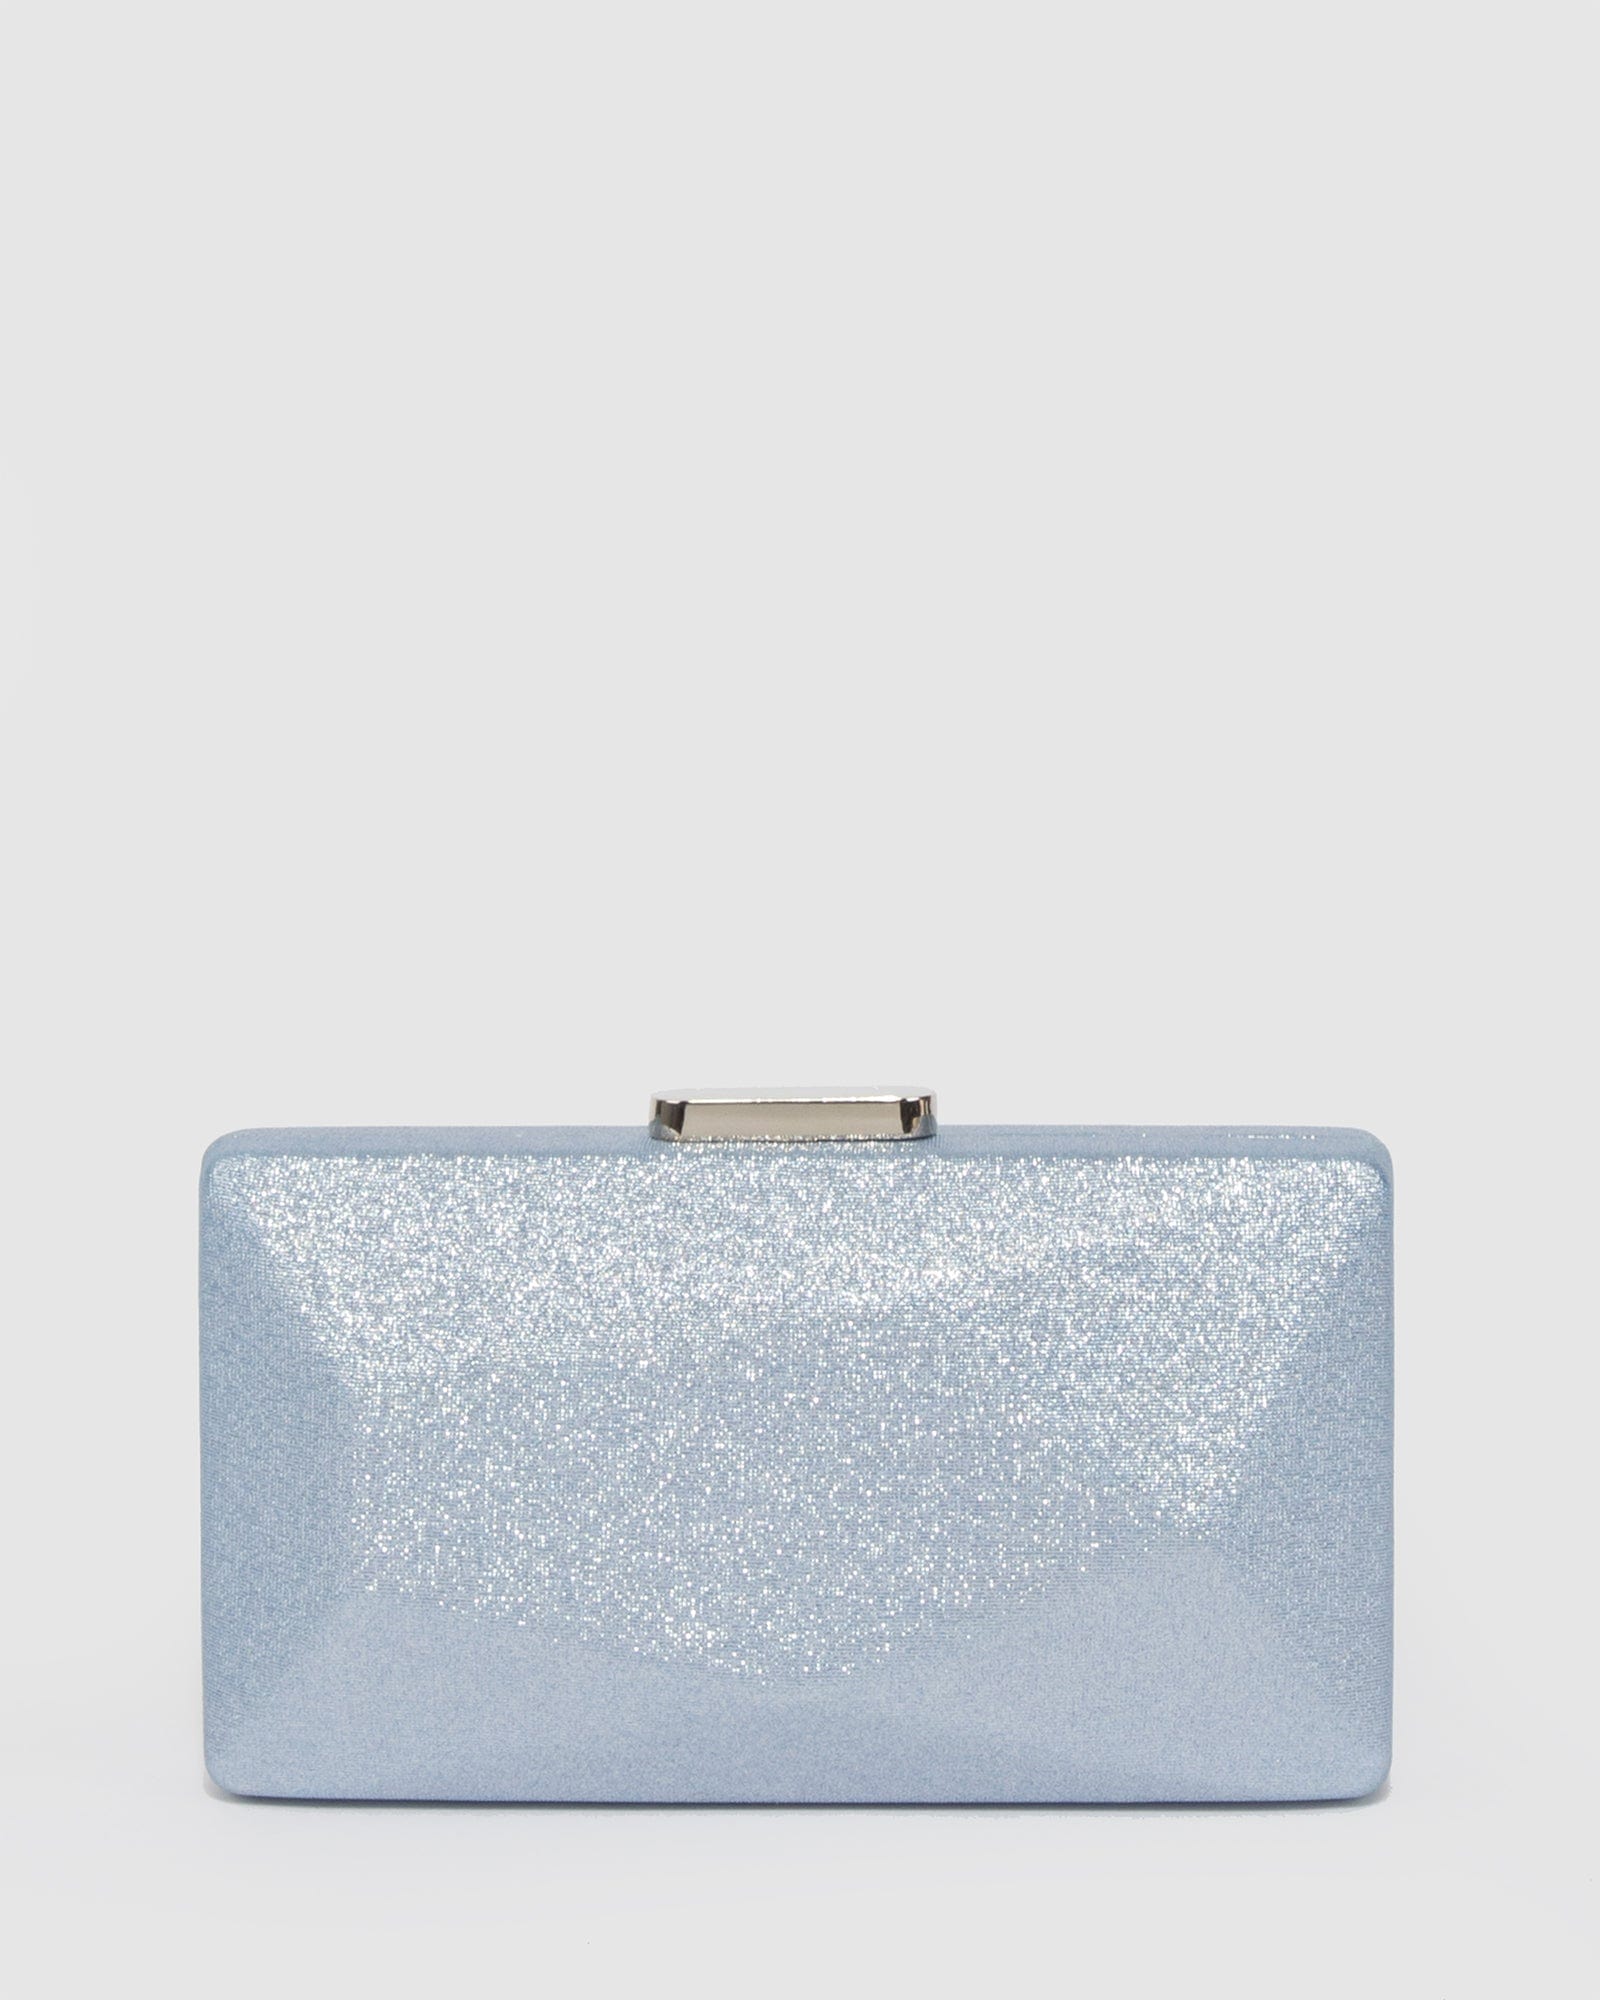 Colette Hayman Womens Handbag / Clutch Pink -1428732(s)